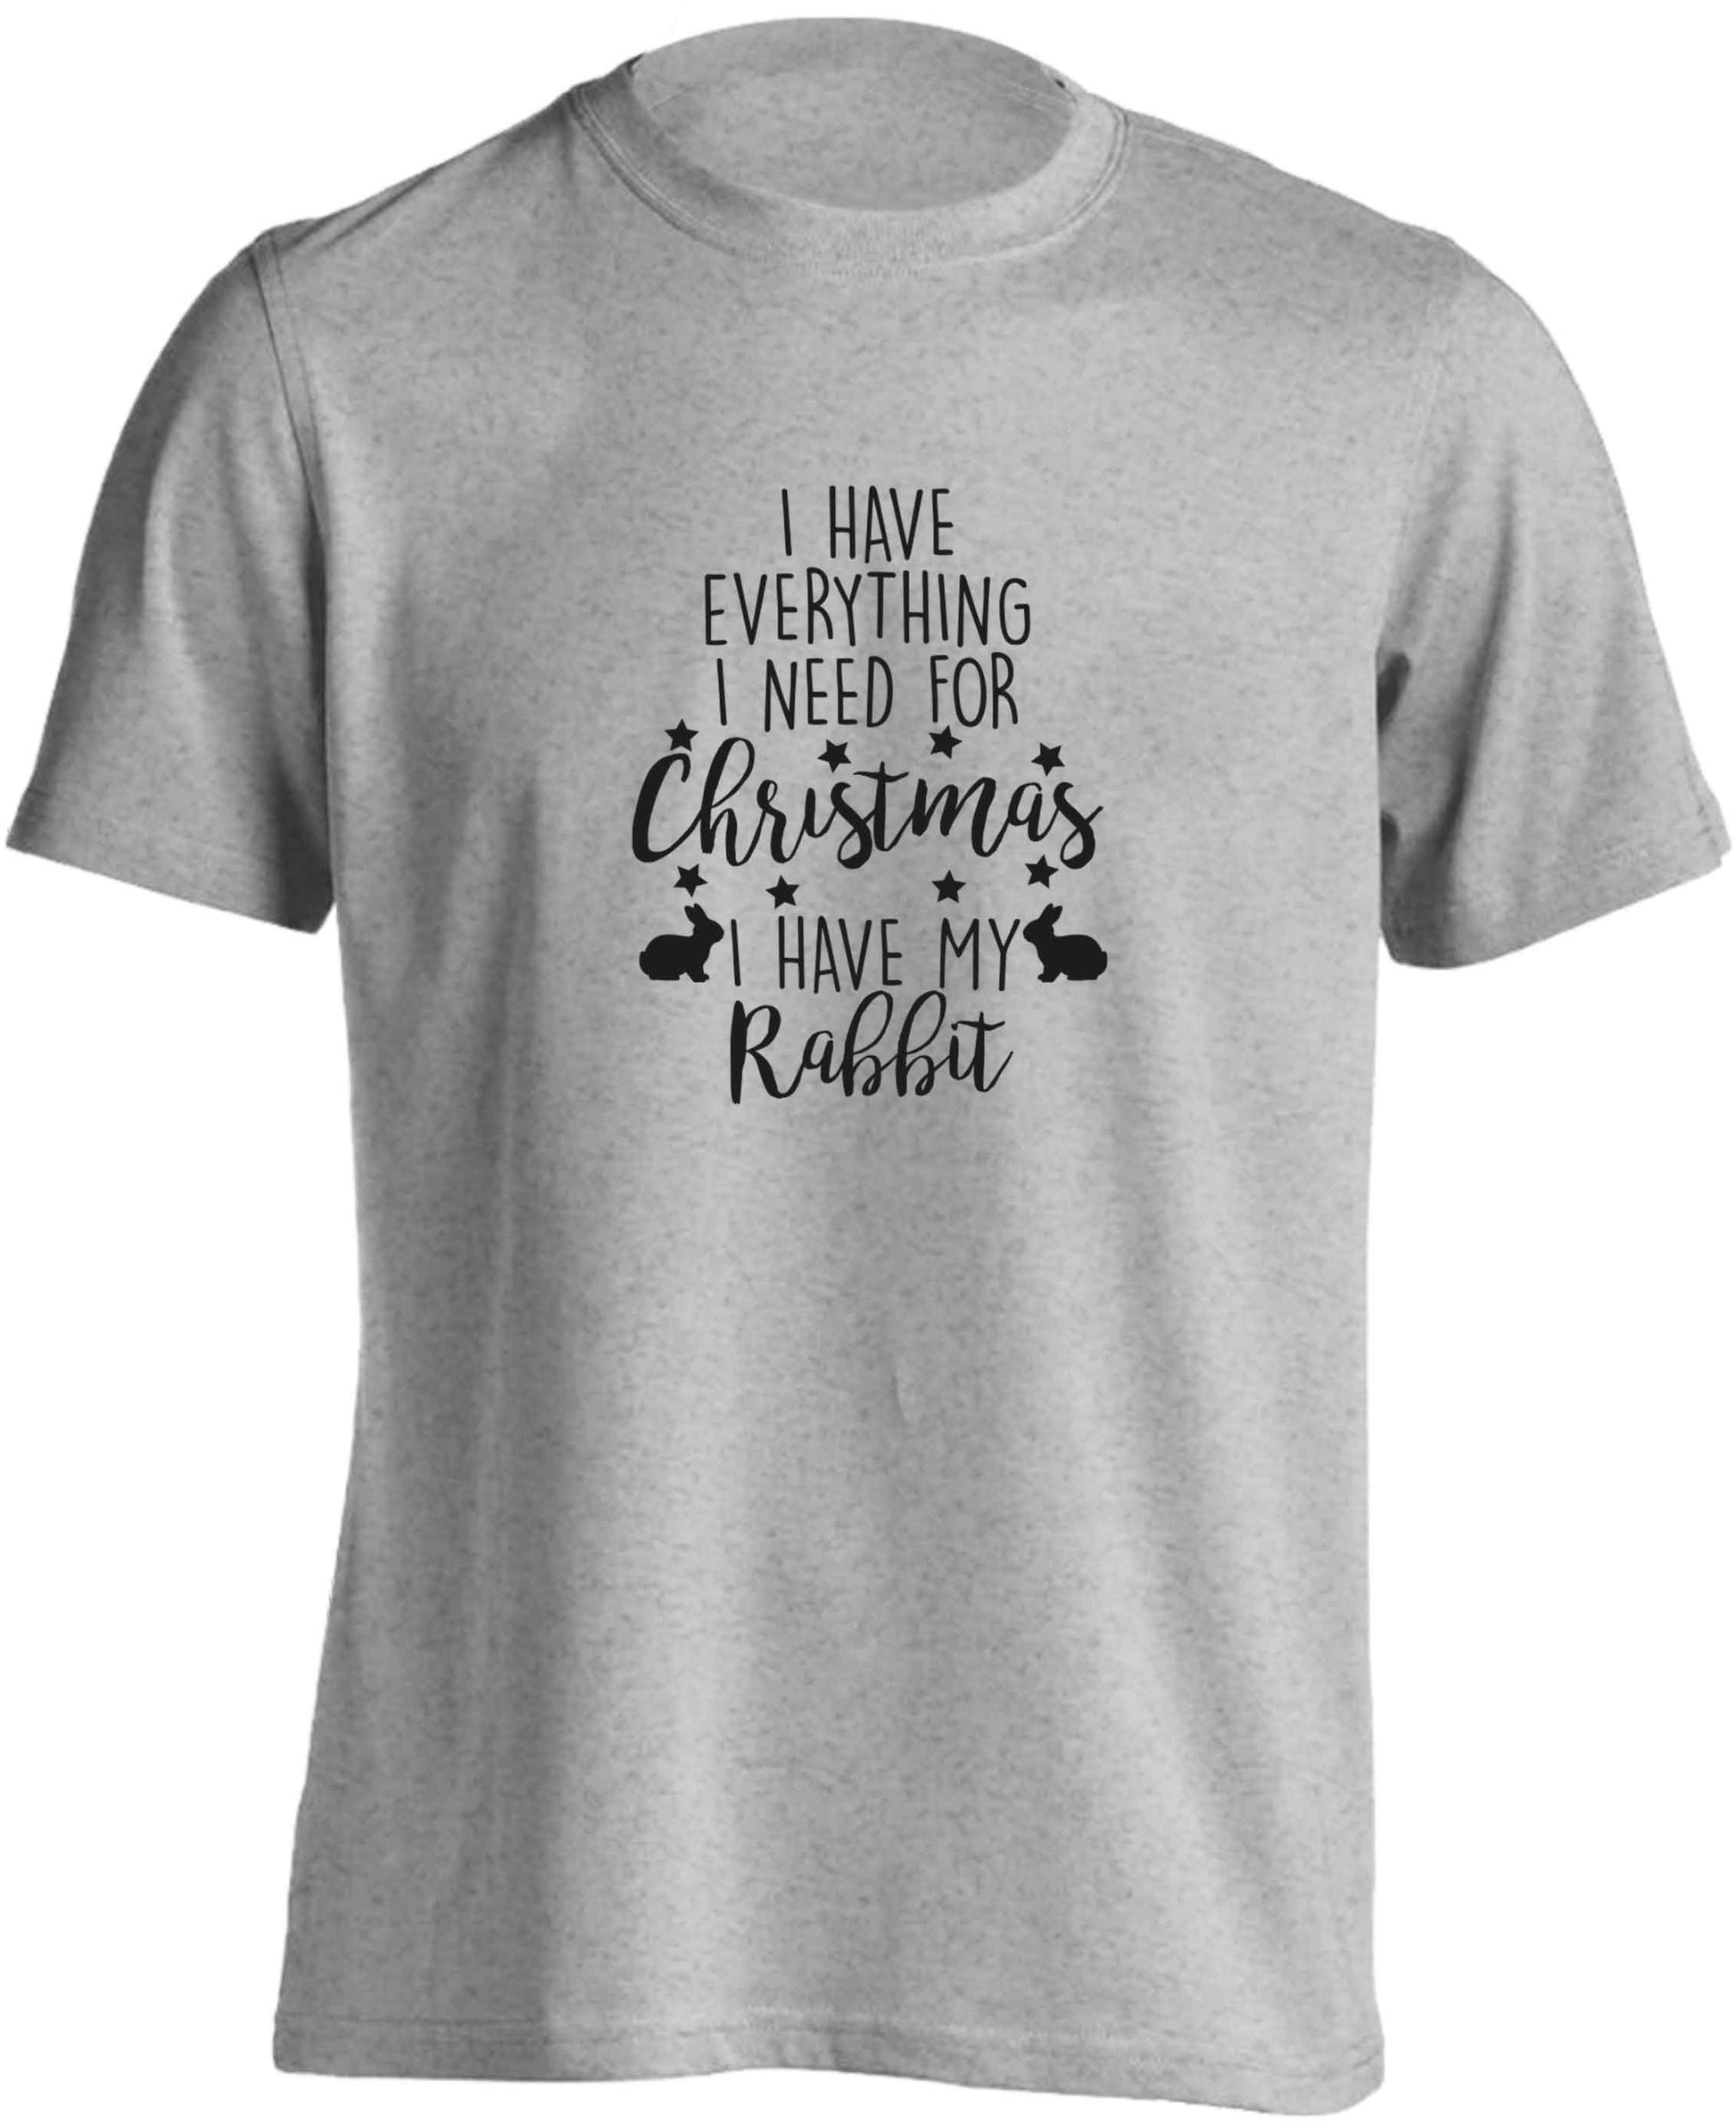 I have everything I need for Christmas I have my rabbit adults unisex grey Tshirt 2XL